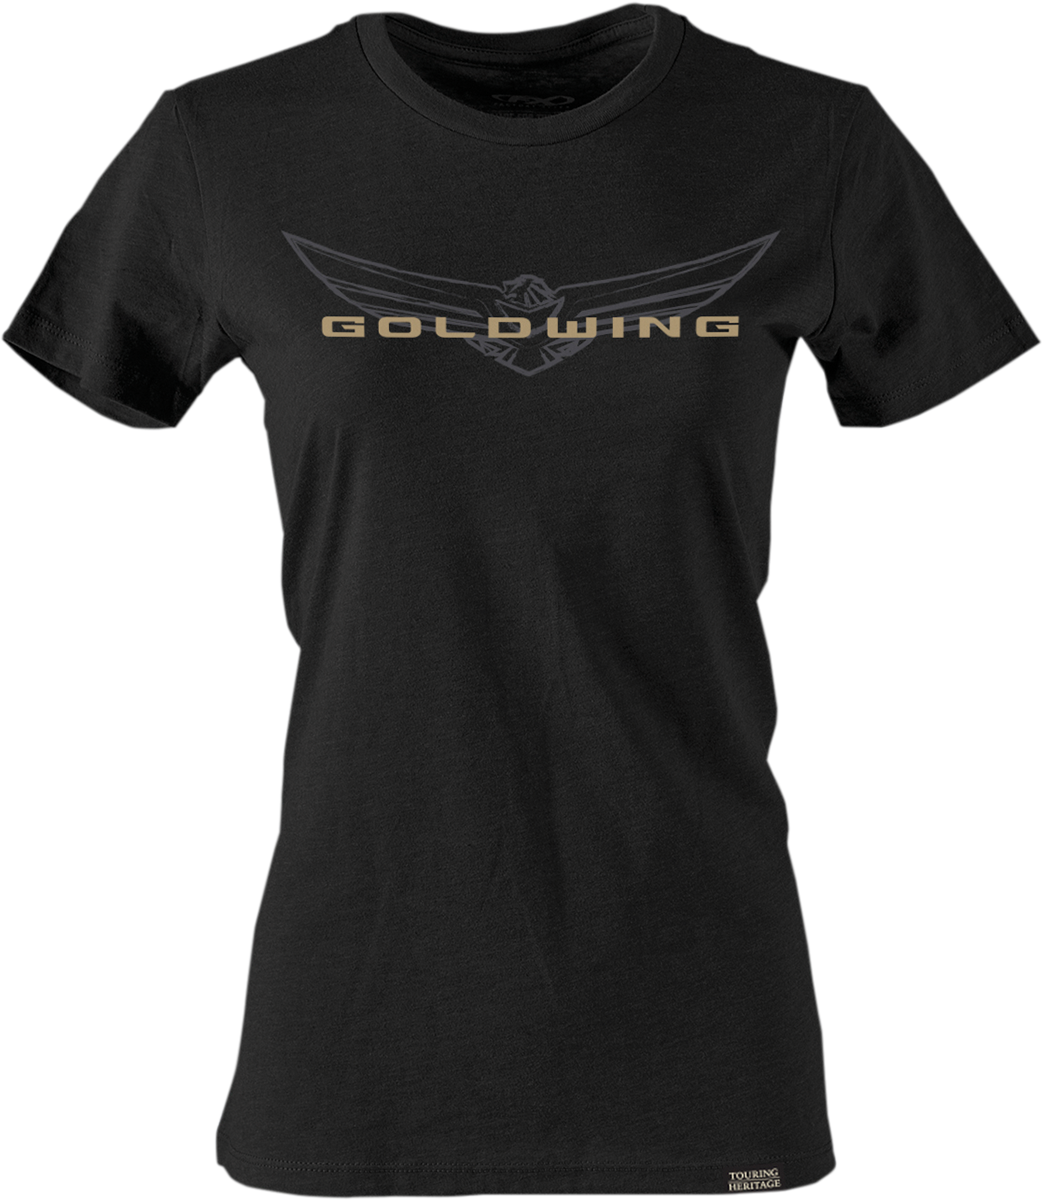 FACTORY EFFEX Women's Goldwing Sketched T-Shirt - Black - Large 25-87844